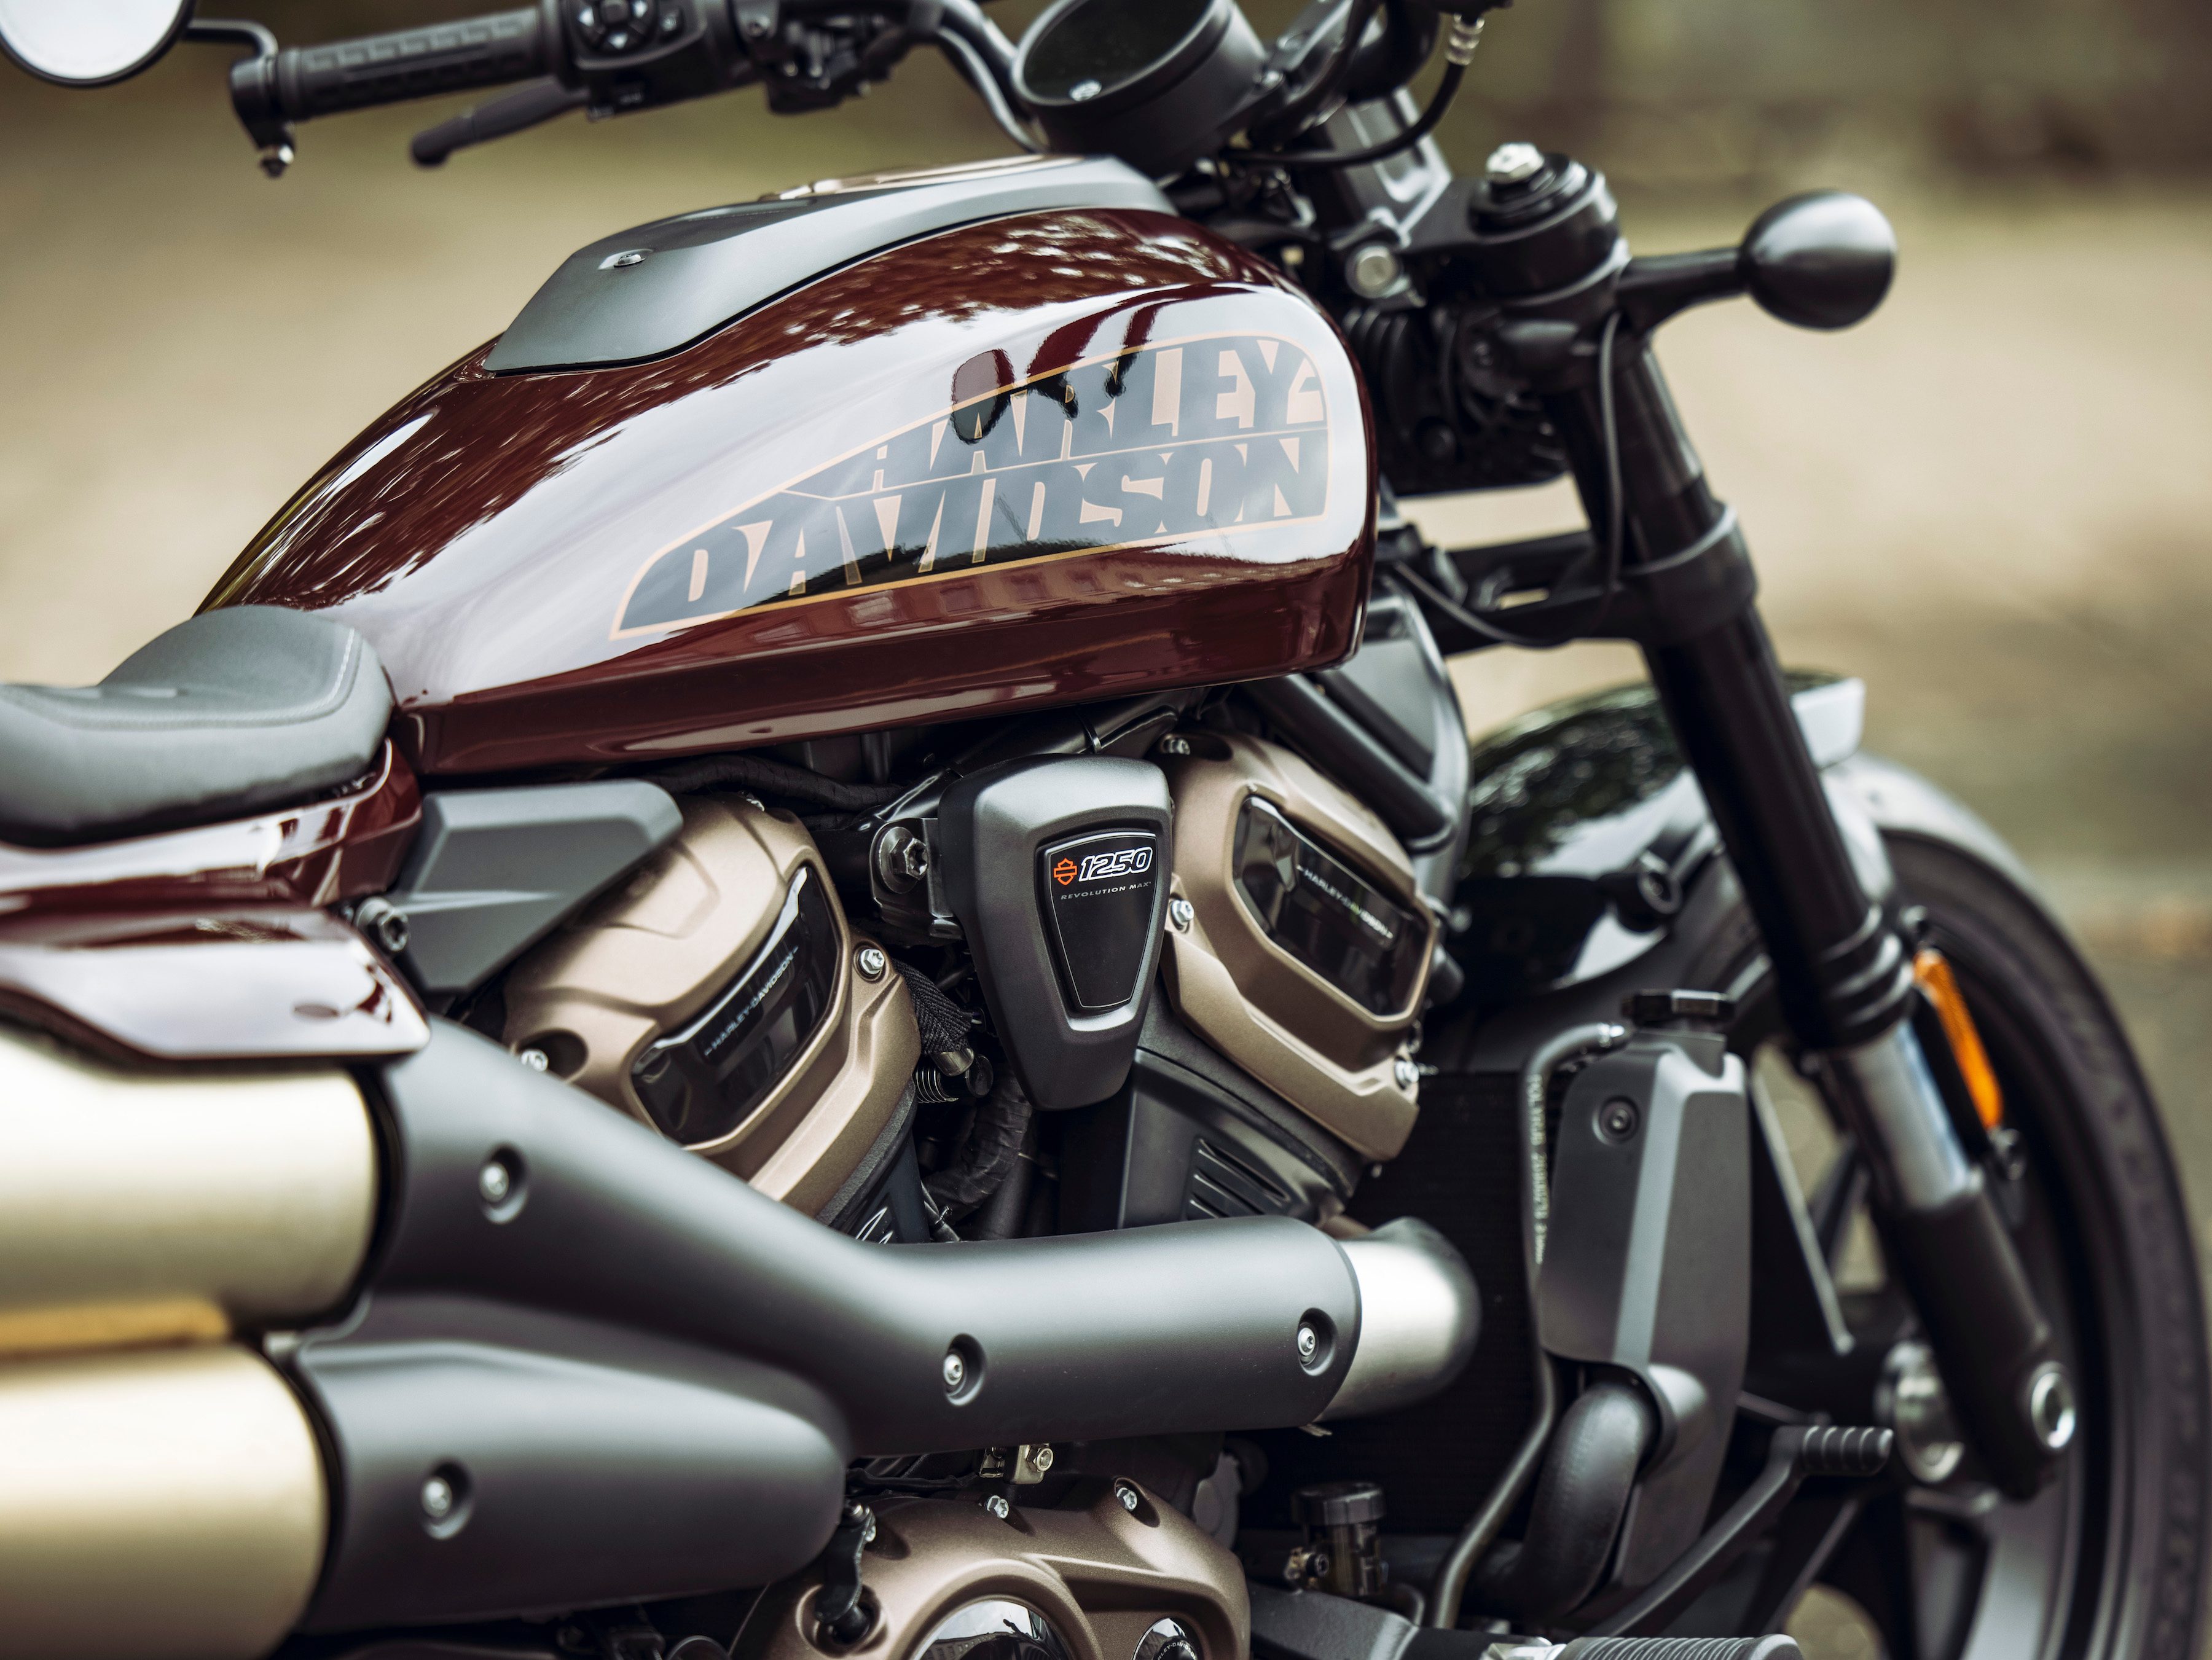 Harley-Davidson’s turnaround plan shows signs of progress